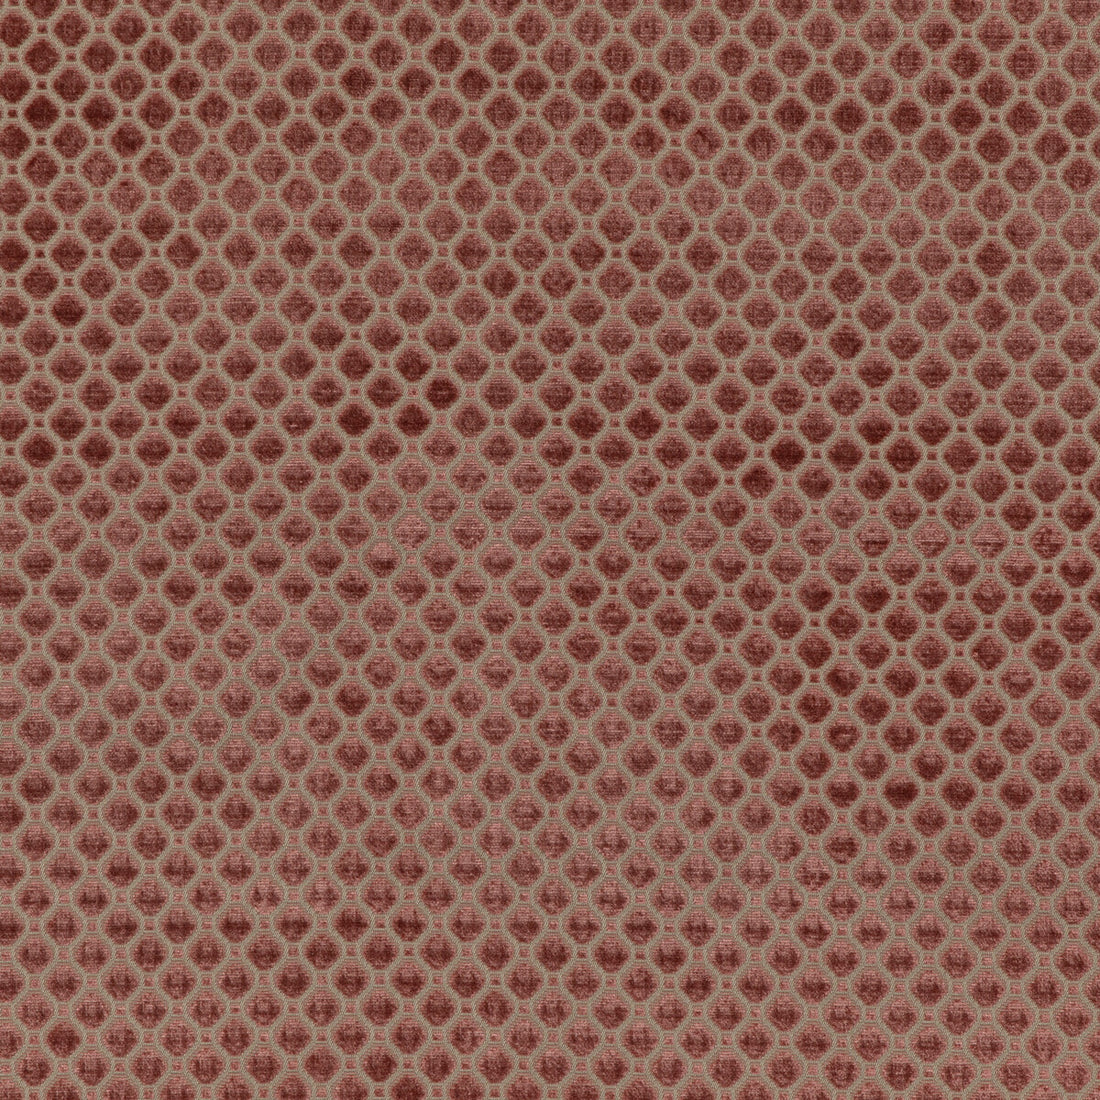 Indus Velvet fabric in blush color - pattern BF10826.440.0 - by G P &amp; J Baker in the Coromandel Velvets collection